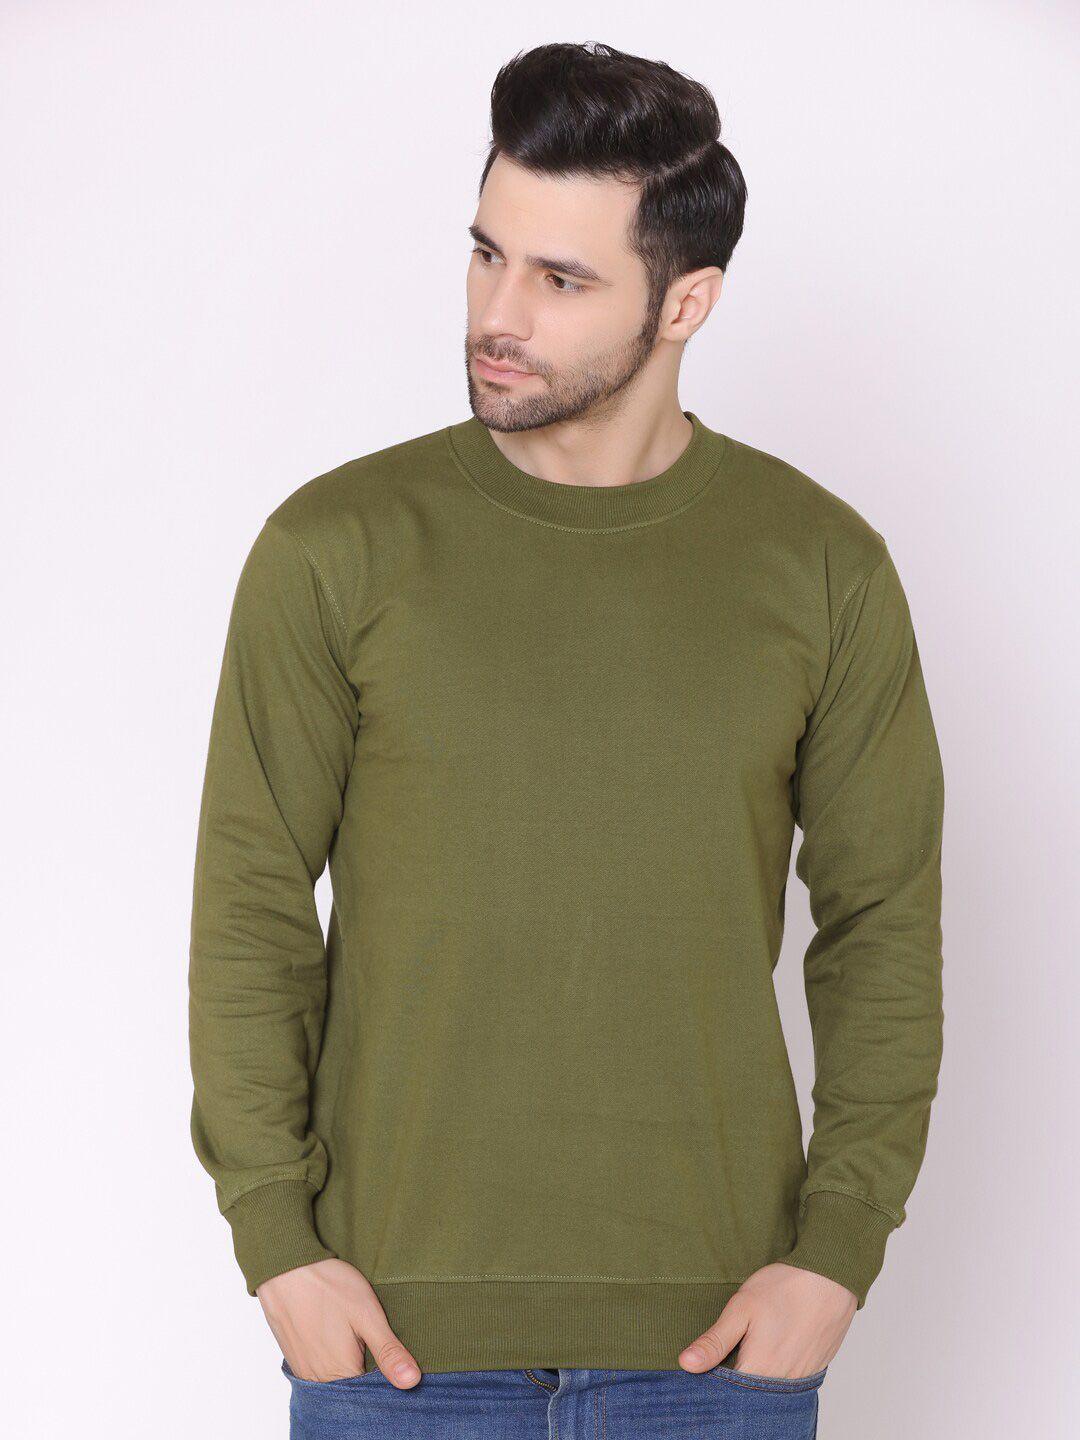 lounge dreams men olive green cotton sweatshirt